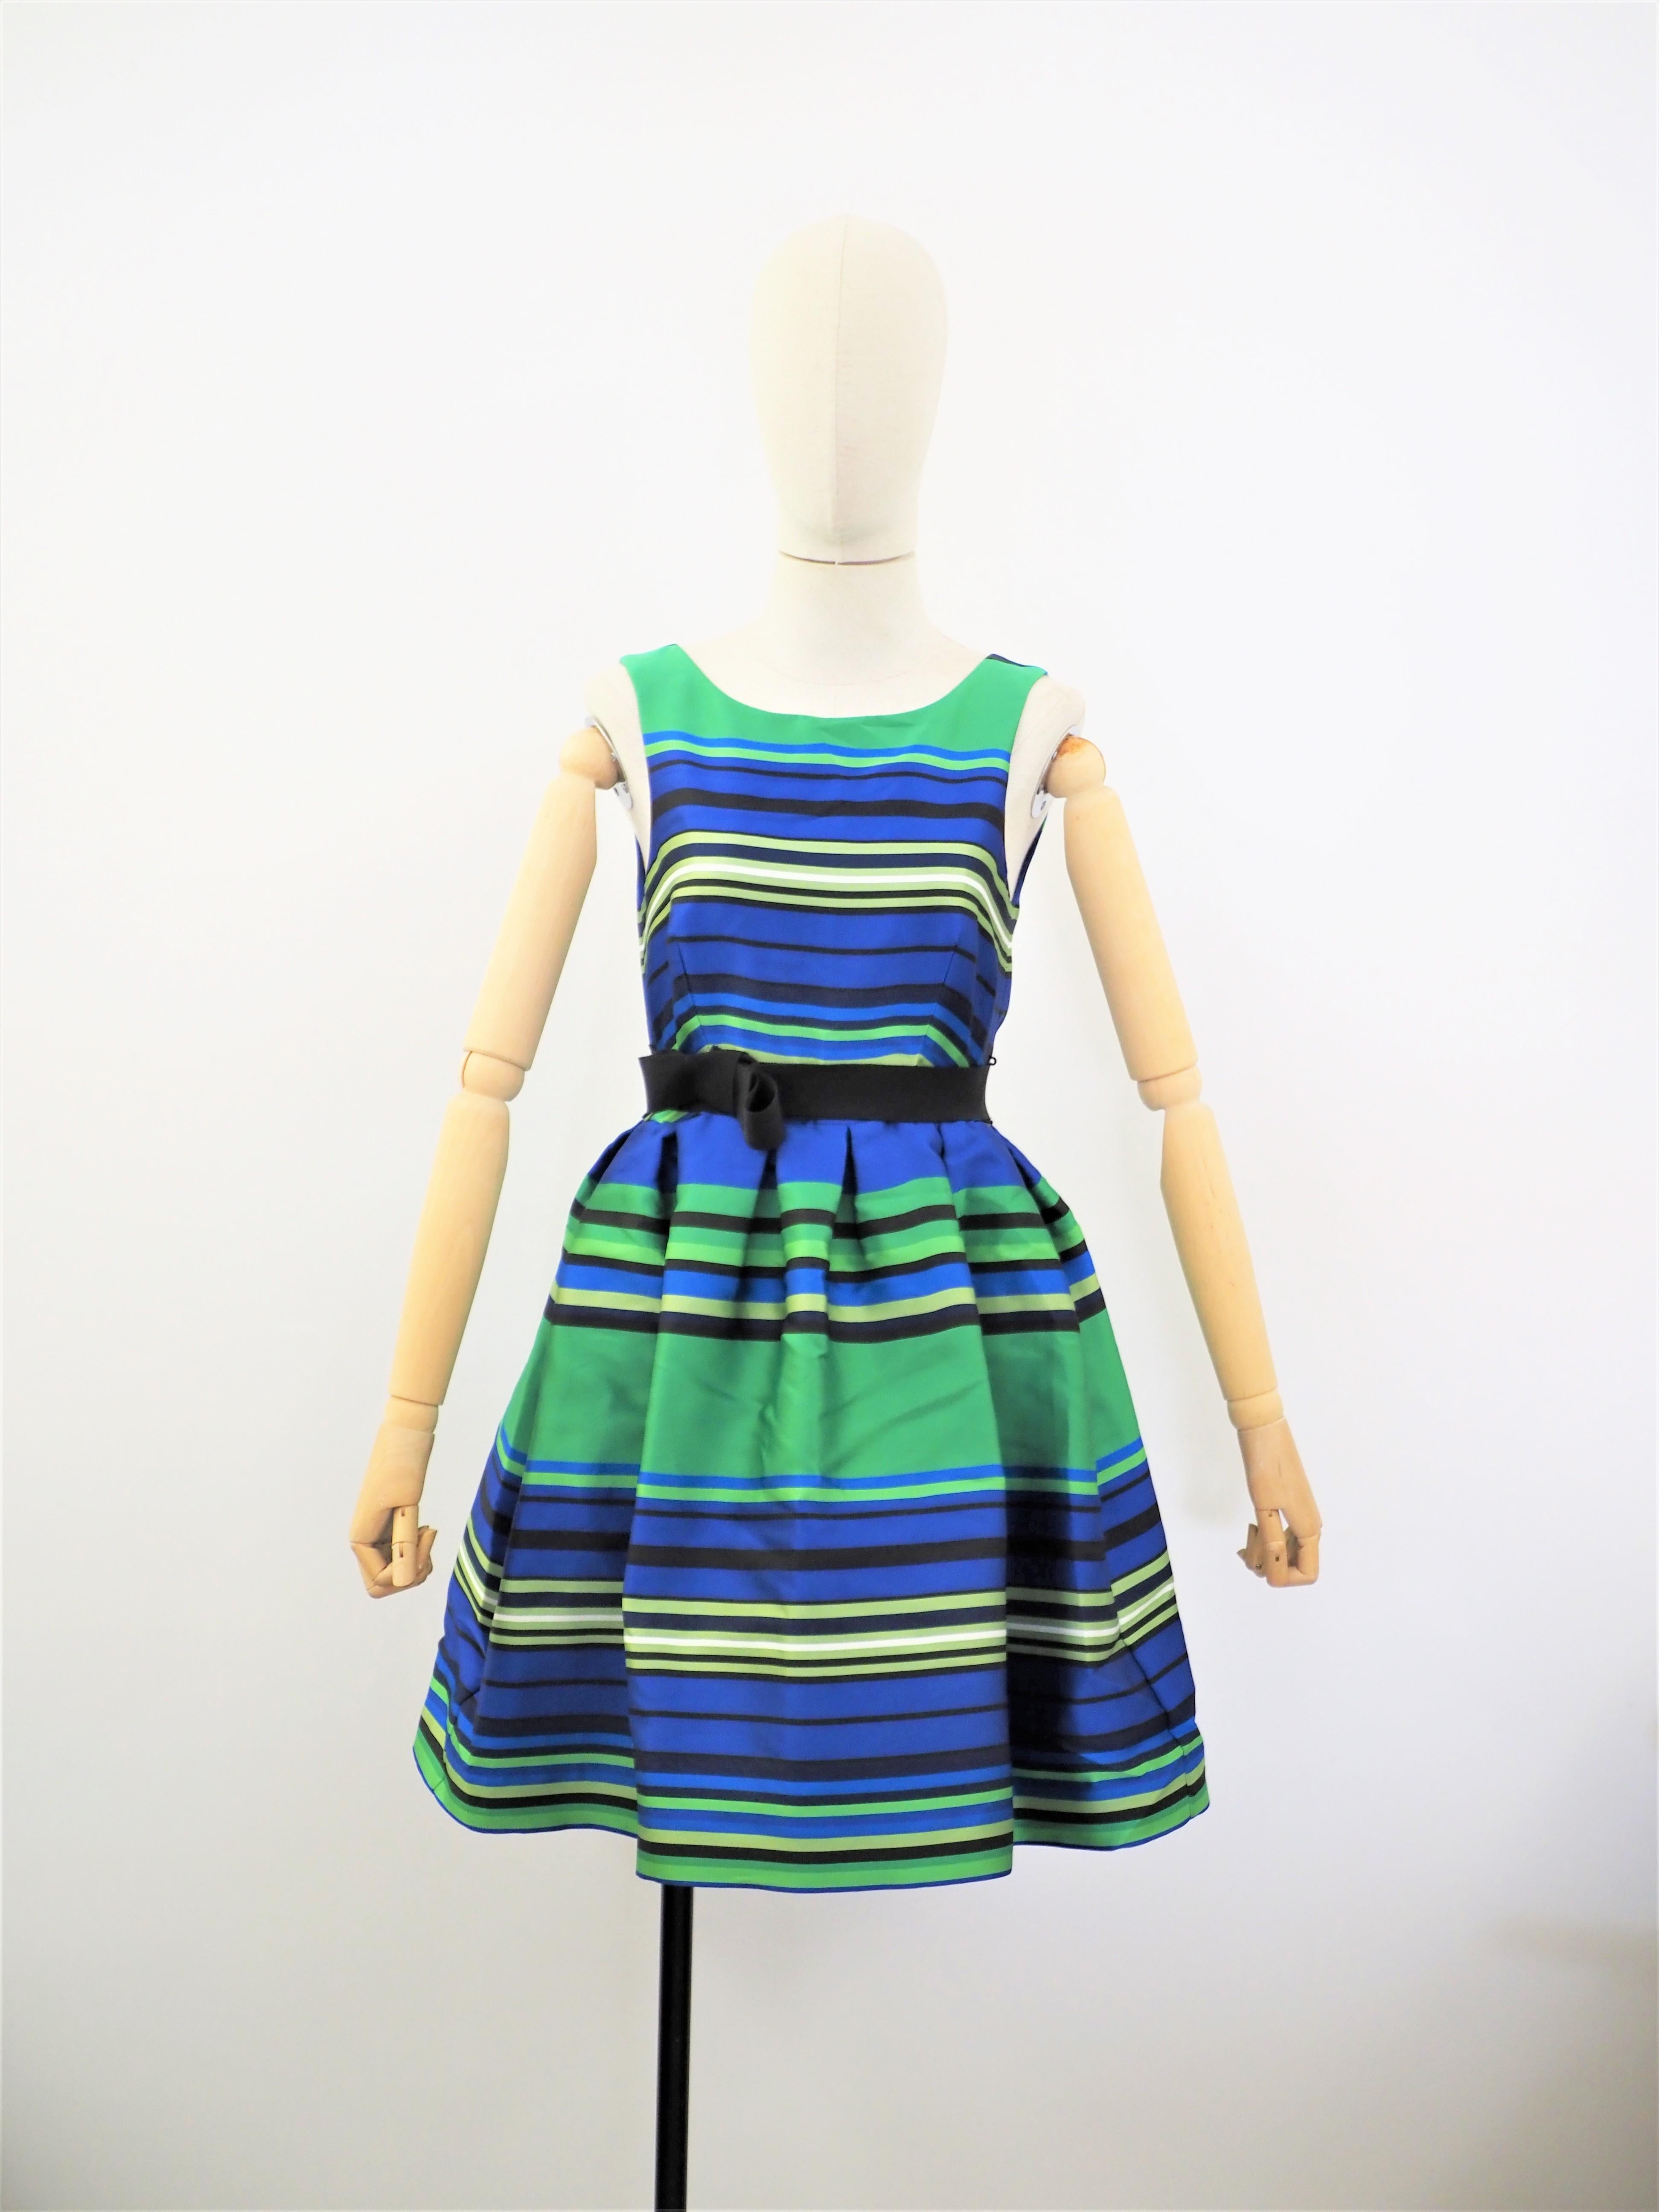 Parosh multicoloured dress 
Size S 